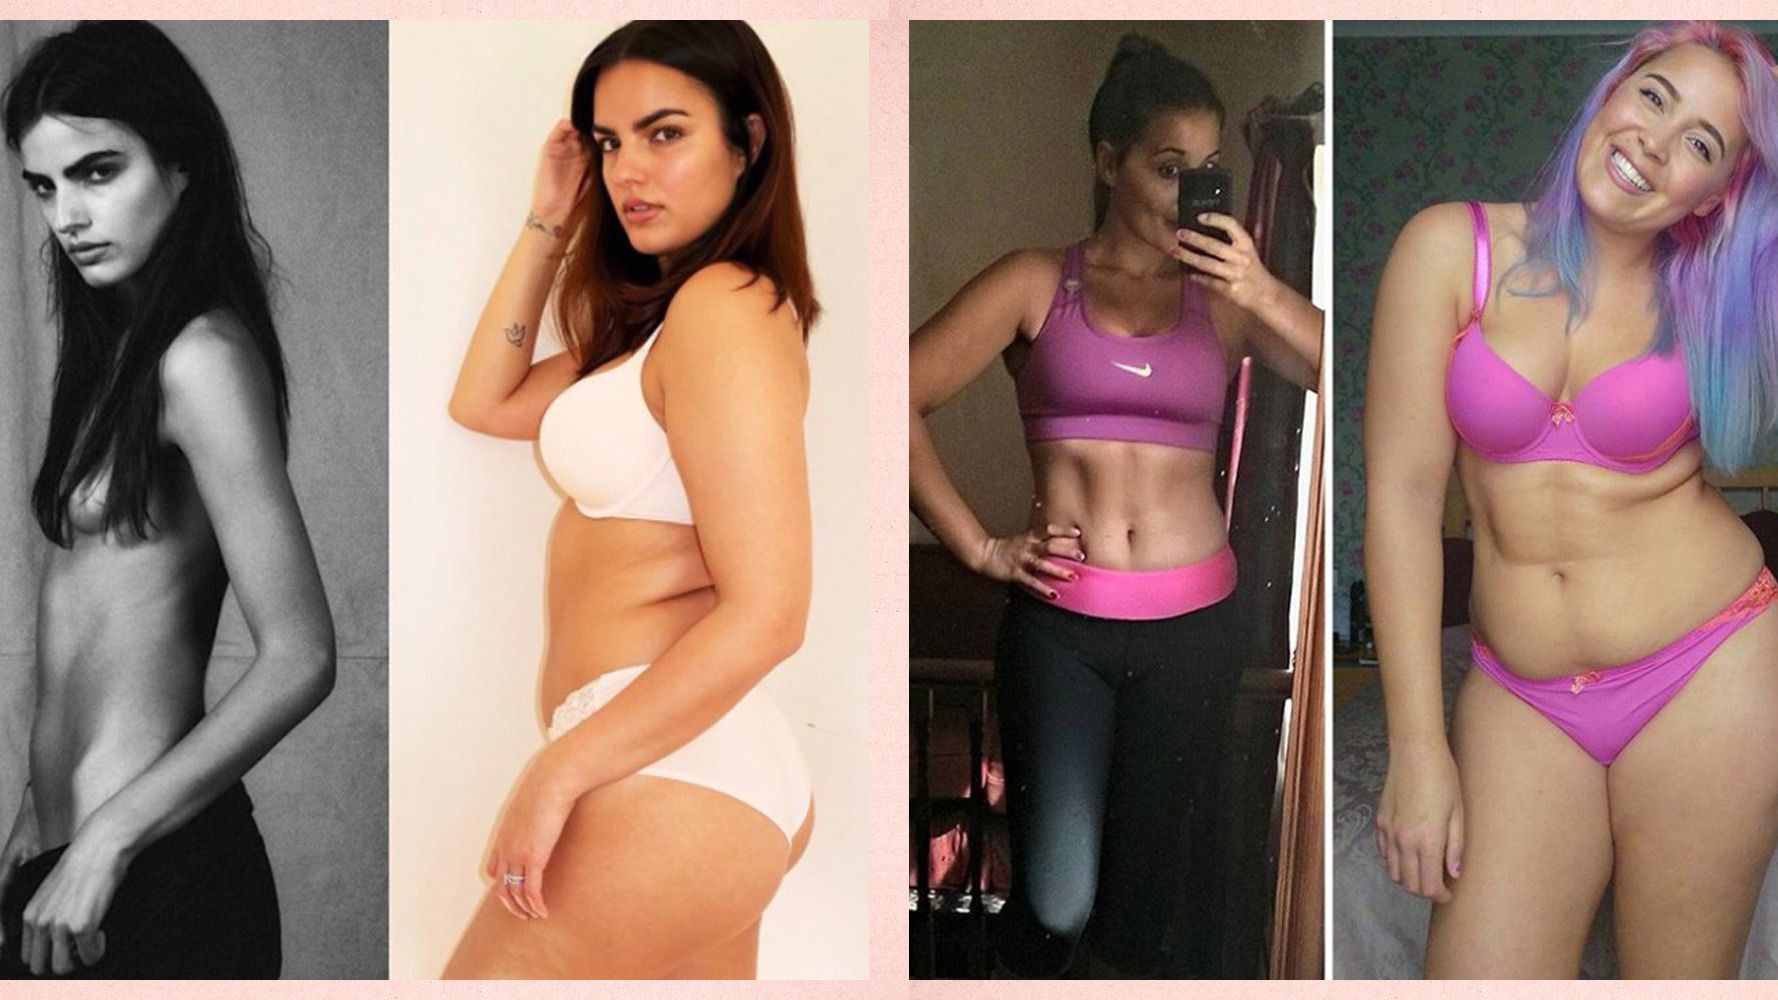 Skinny Girls Having Sex - 12 women body transformations who prove progress is possible